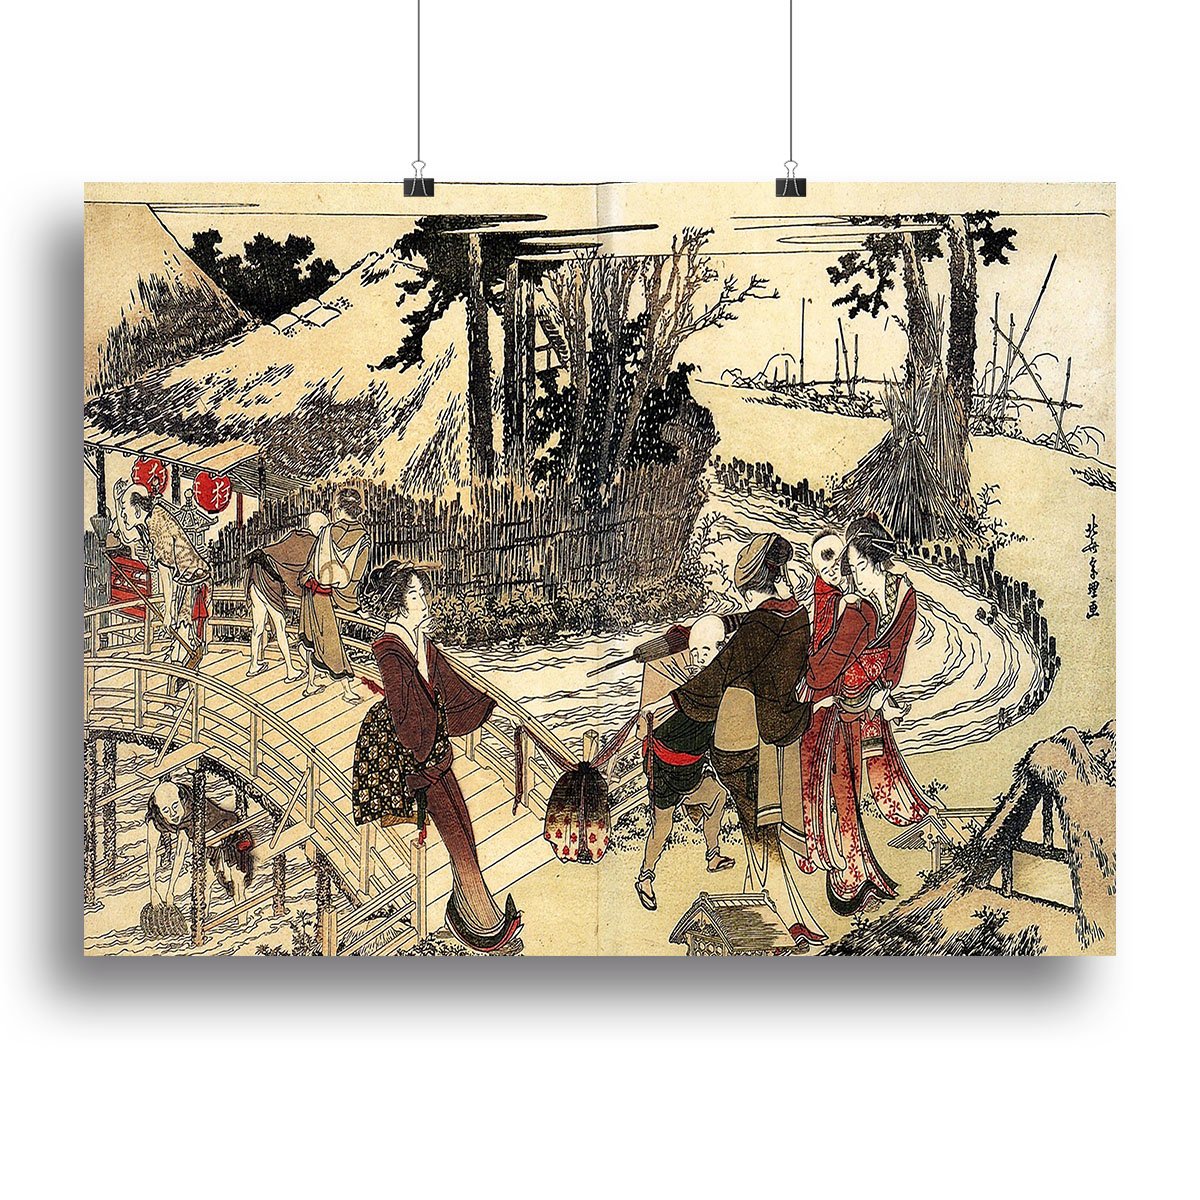 Village near a bridge by Hokusai Canvas Print or Poster